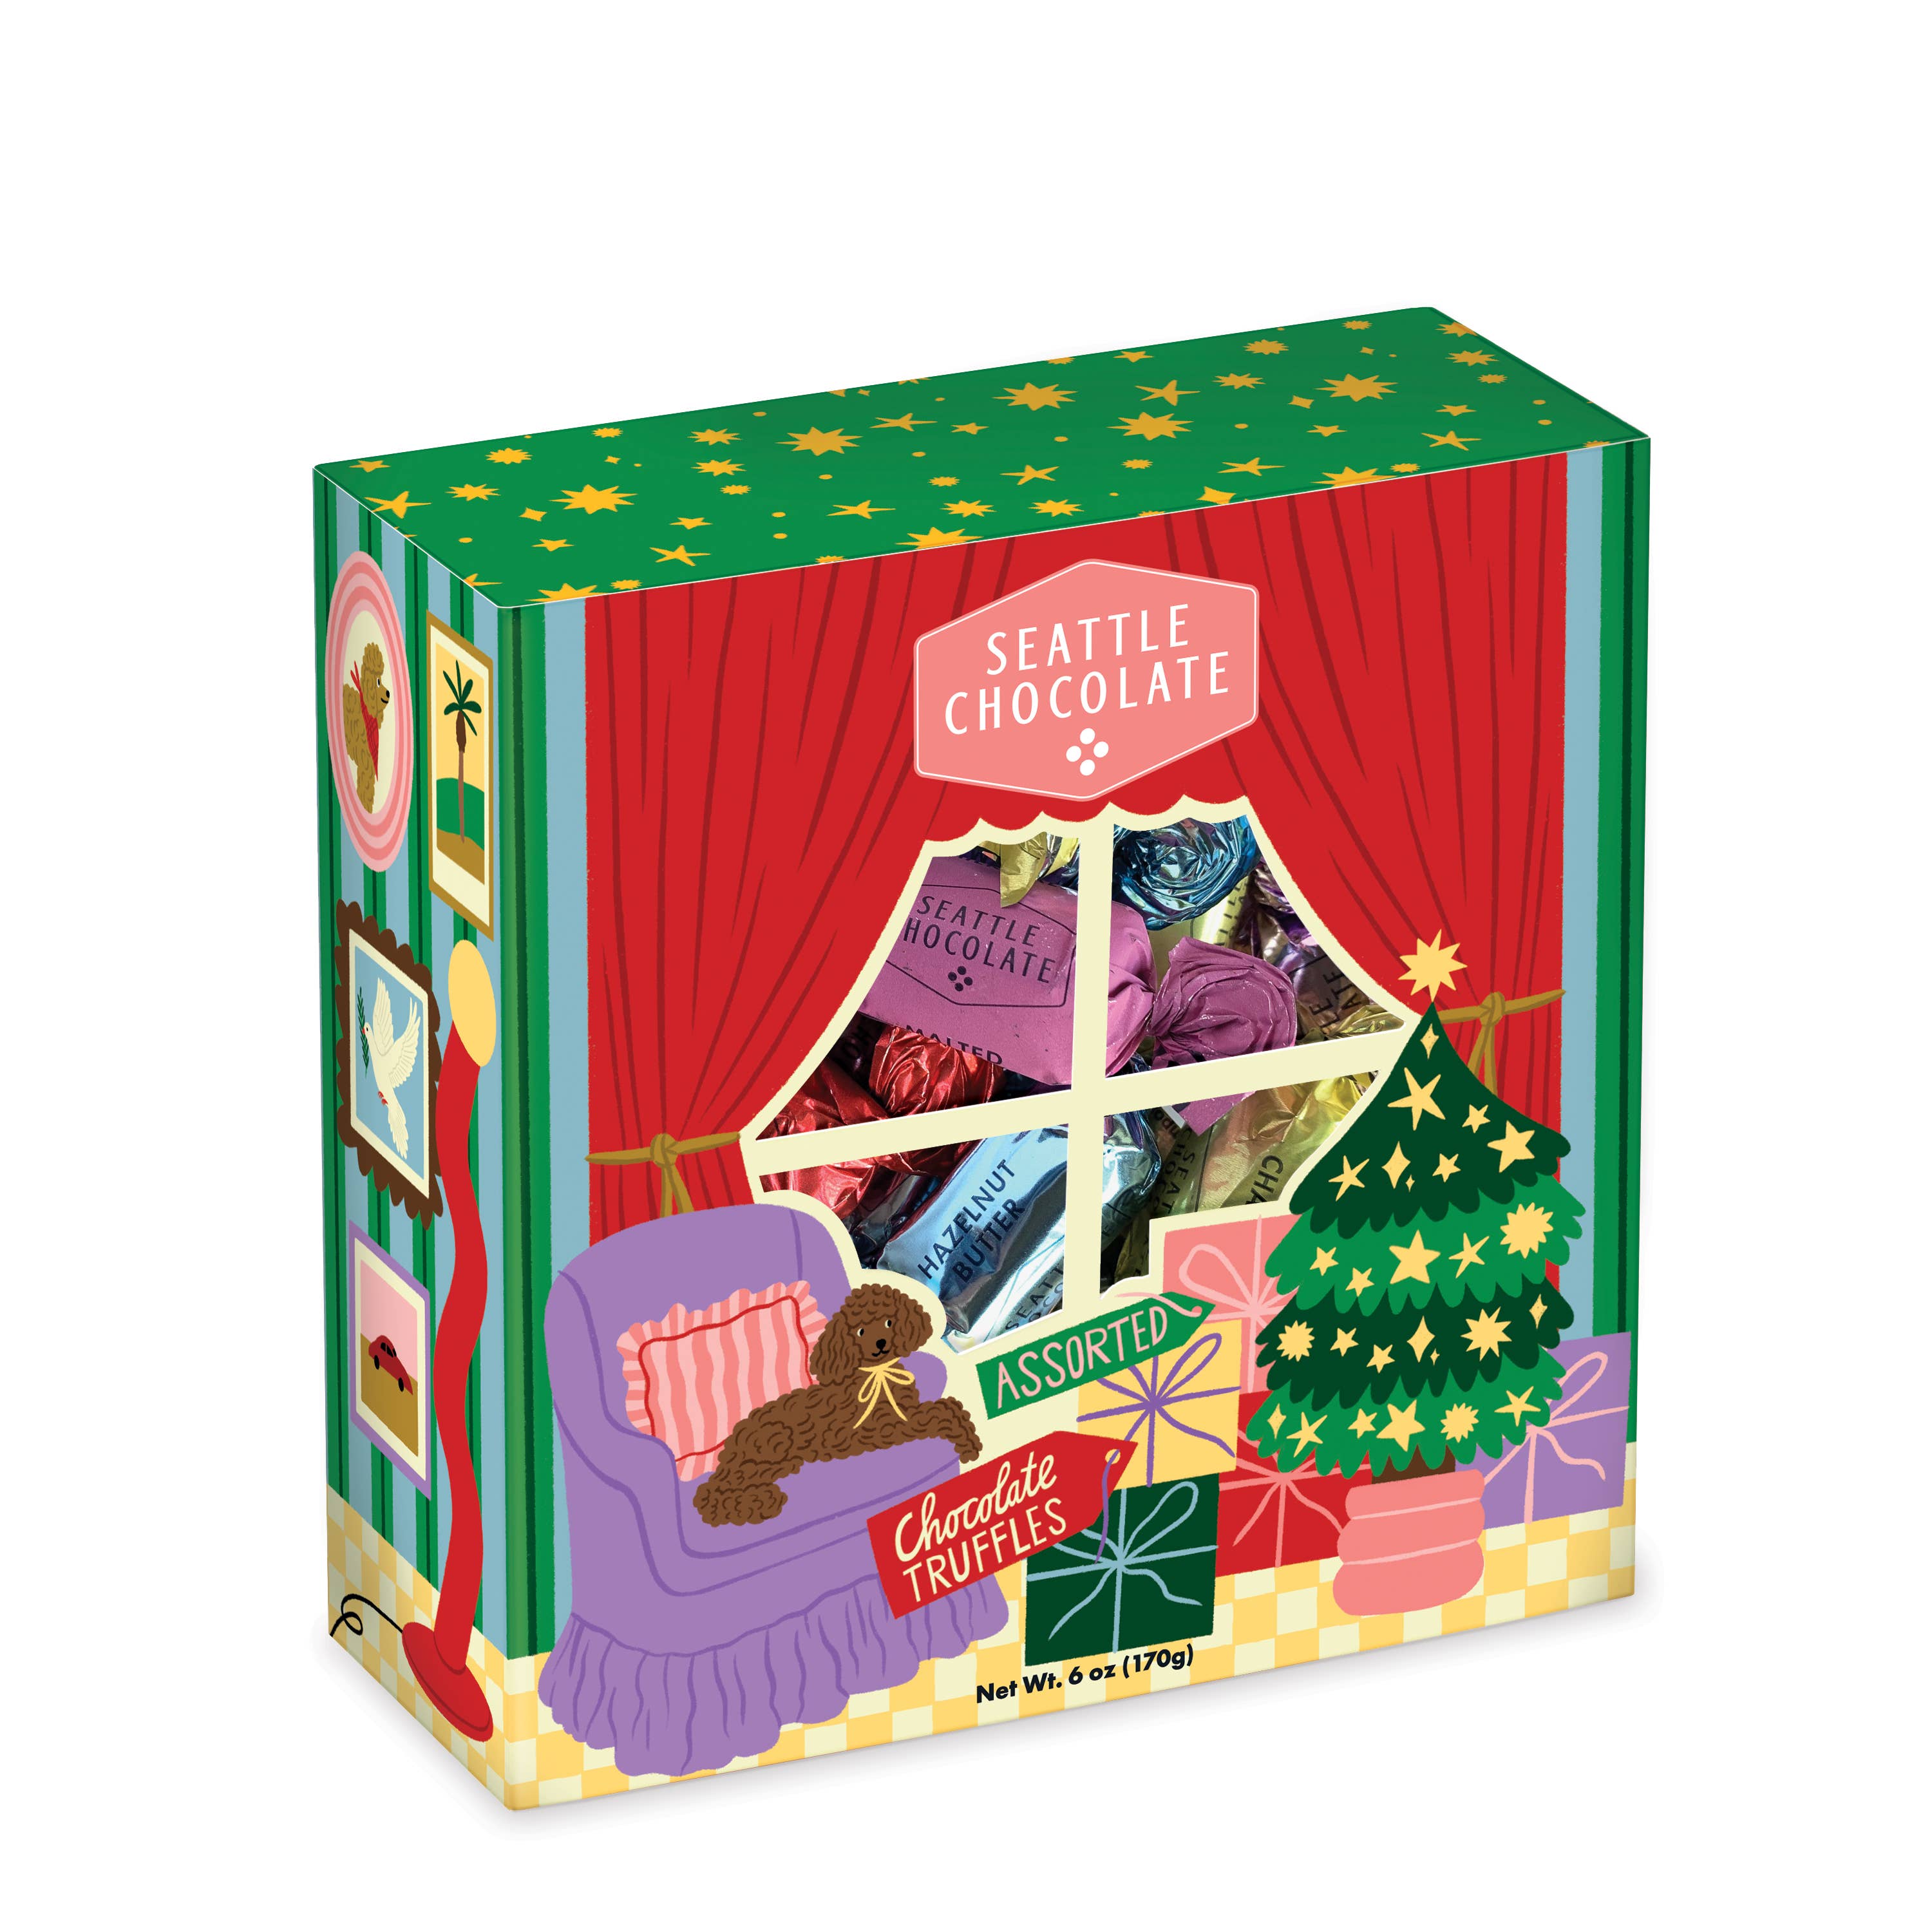 Seattle Chocolate - No Place Like Home Truffle Box